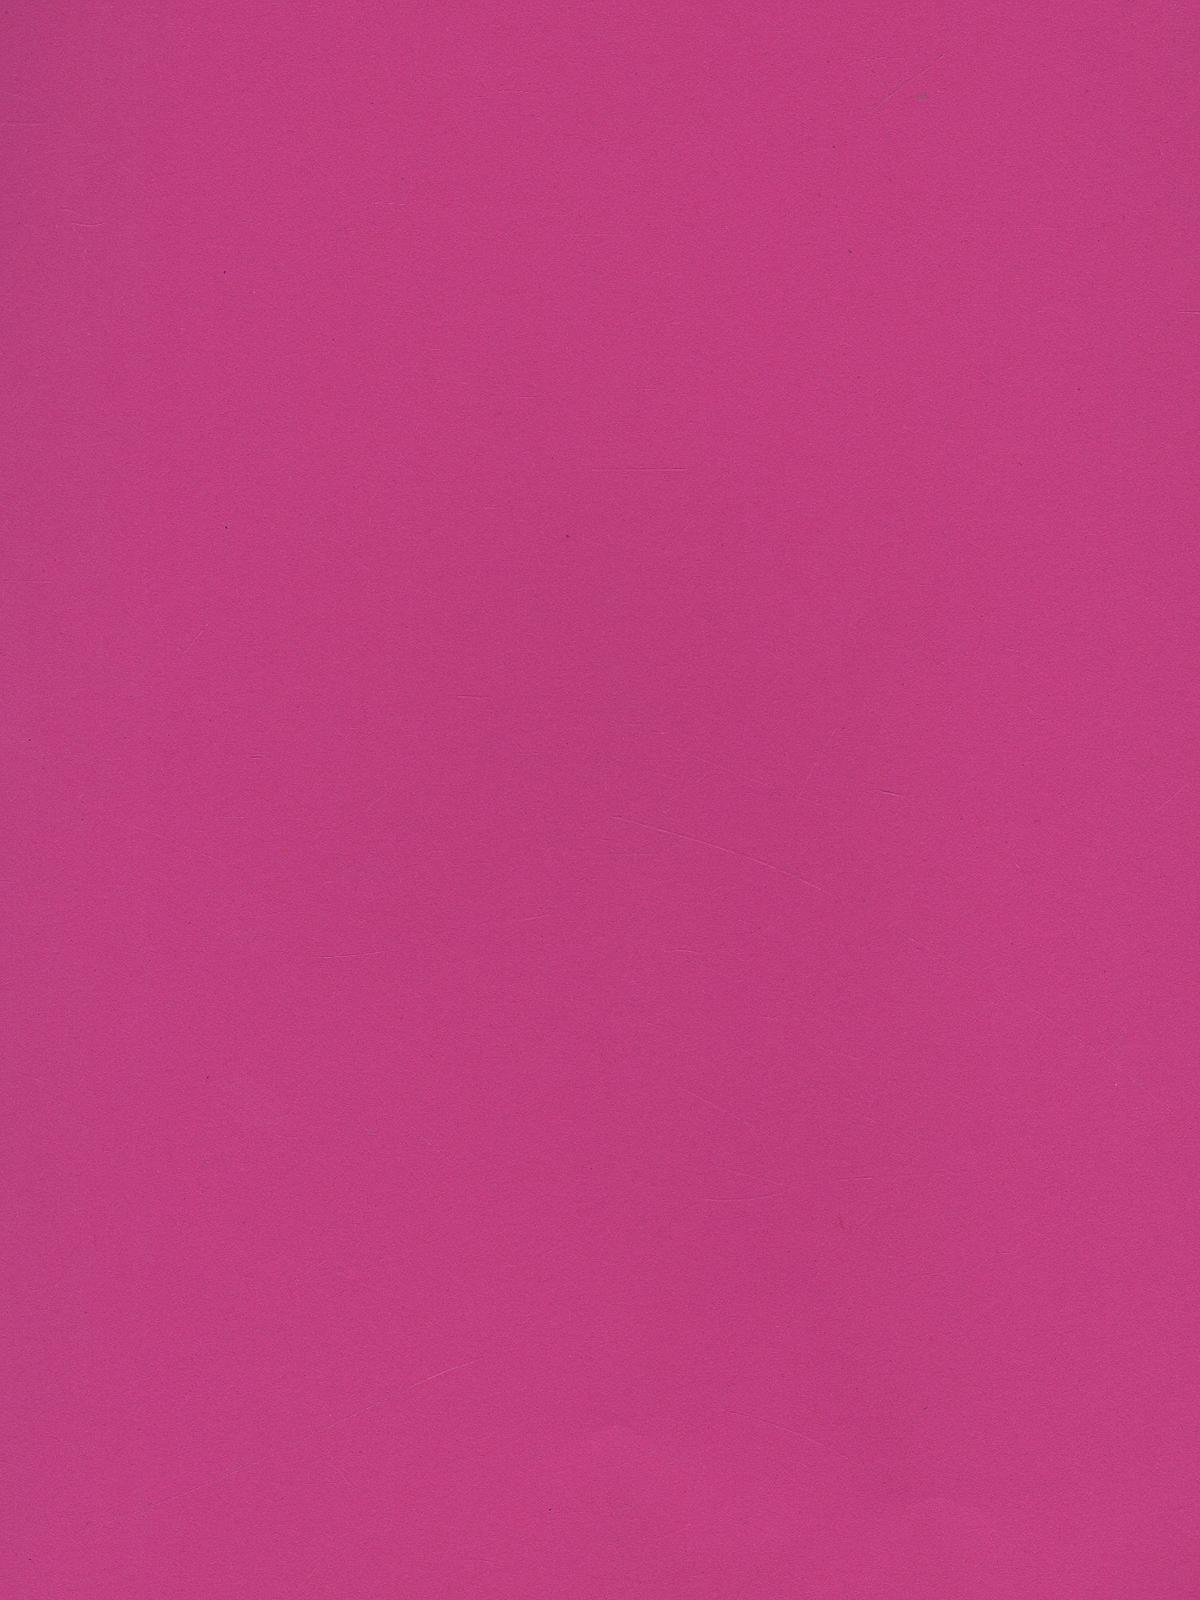 Art Paper Pink 8.5 In. X 11 In.